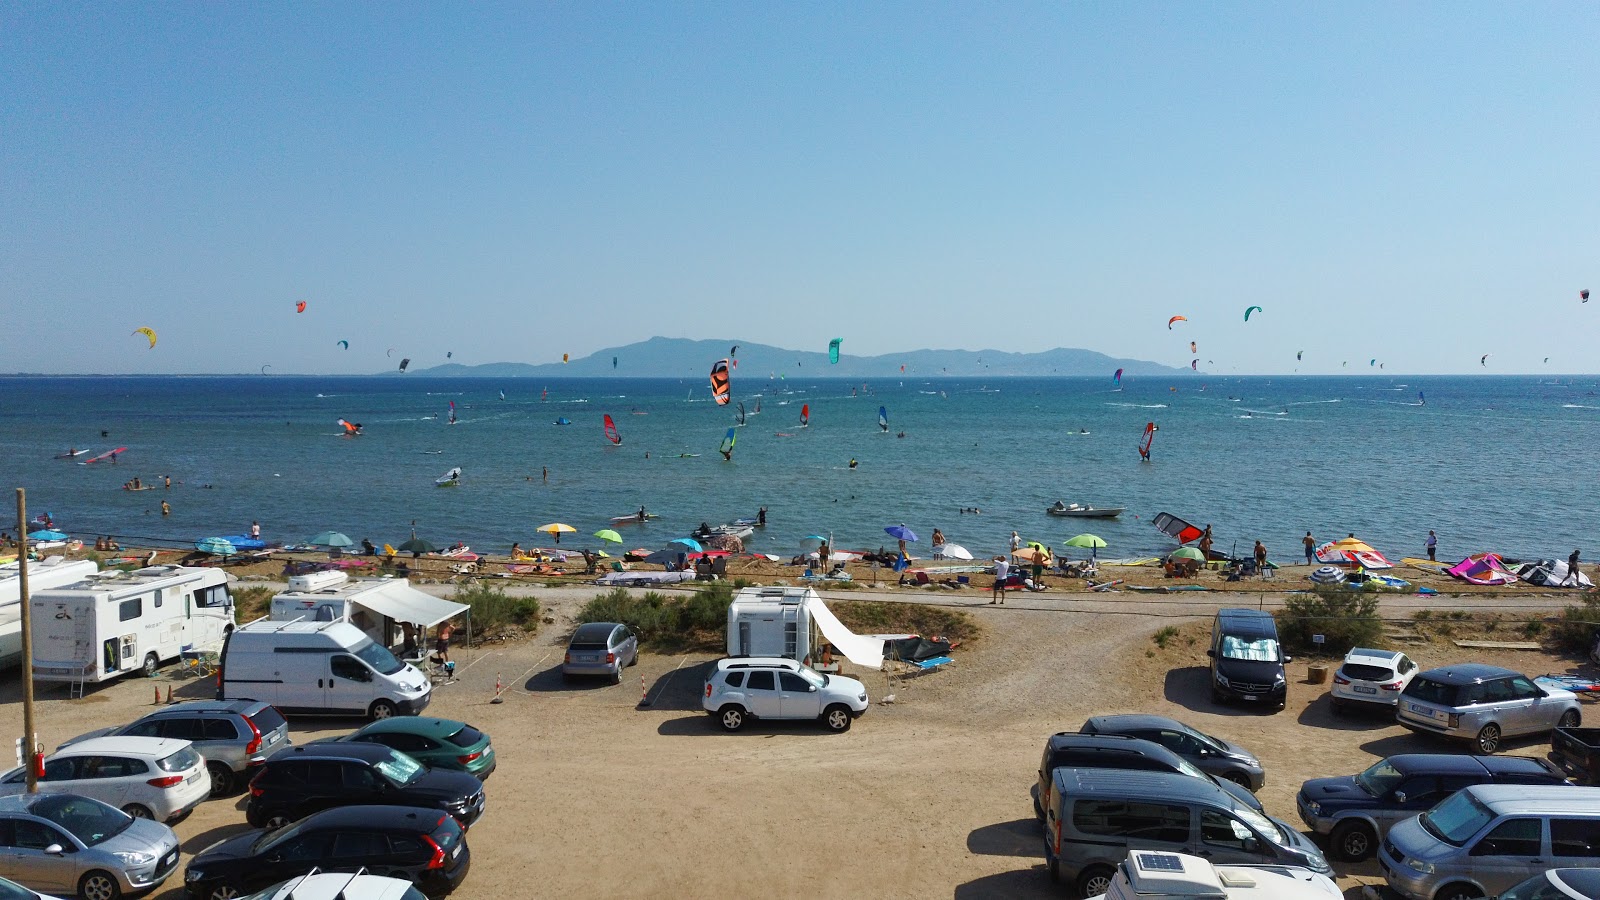 Photo of Spiaggia della Fertilia - popular place among relax connoisseurs